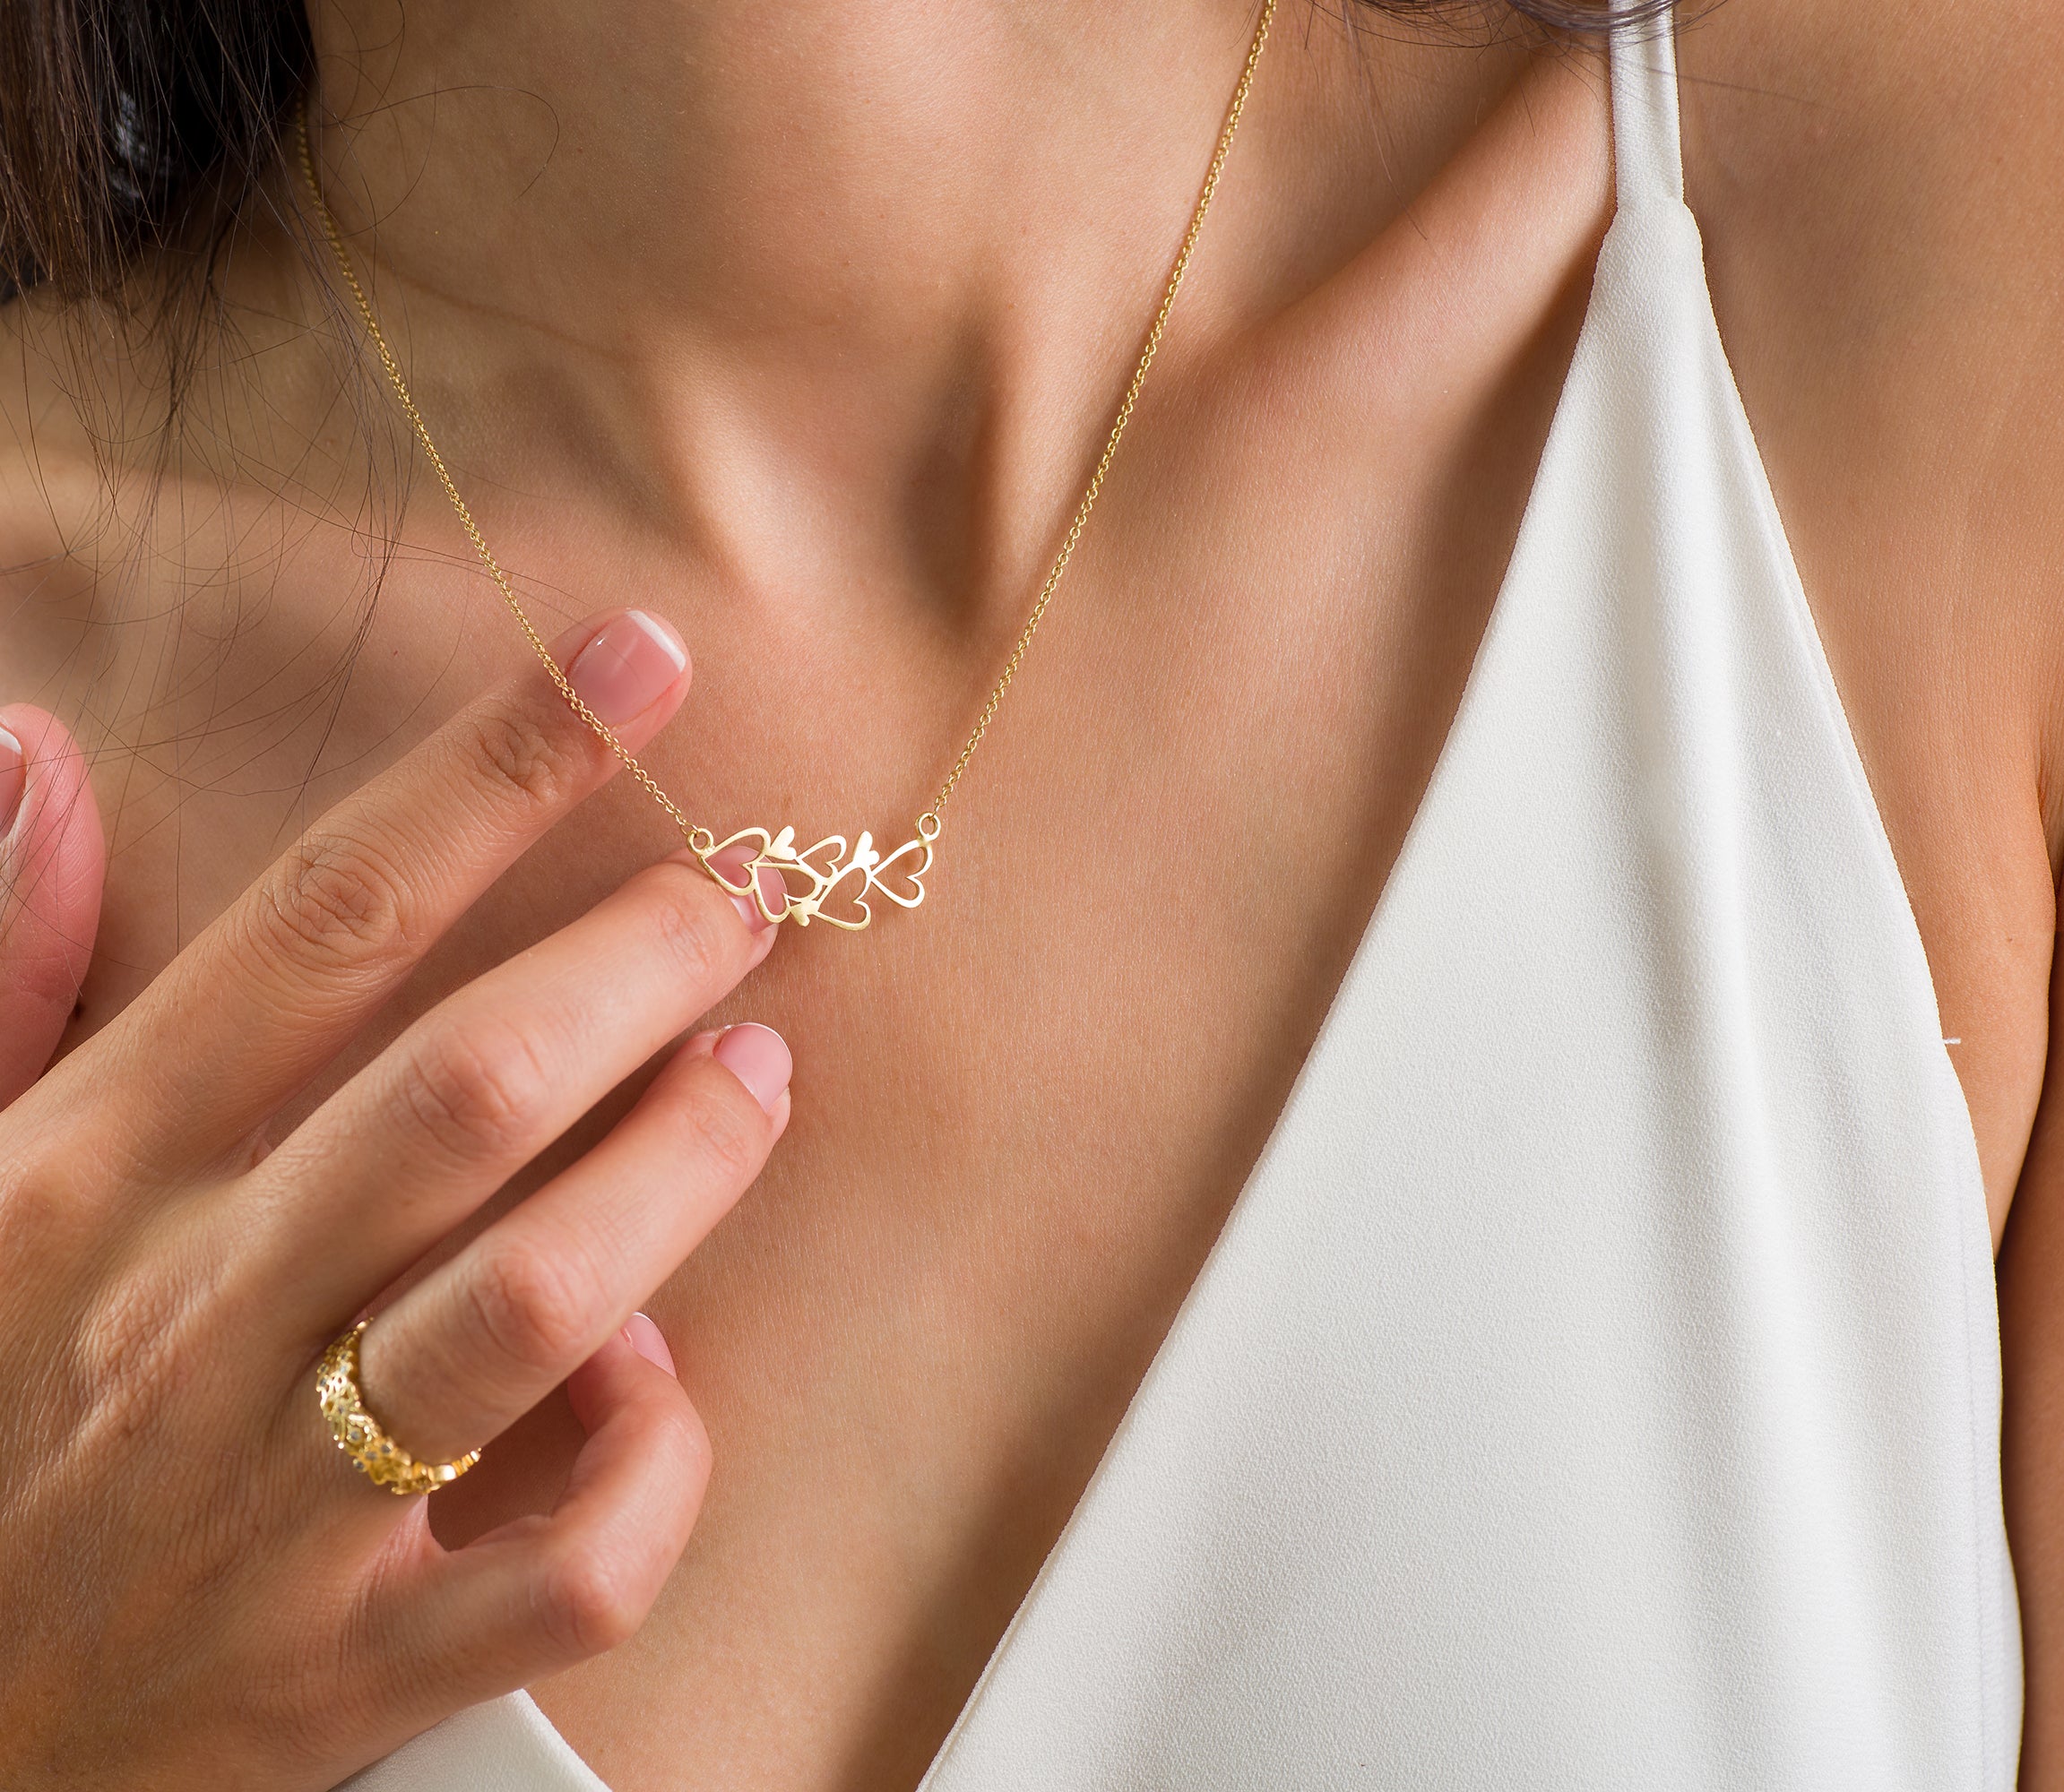 VIROMY Women's Delicate Gold Pendant Necklace